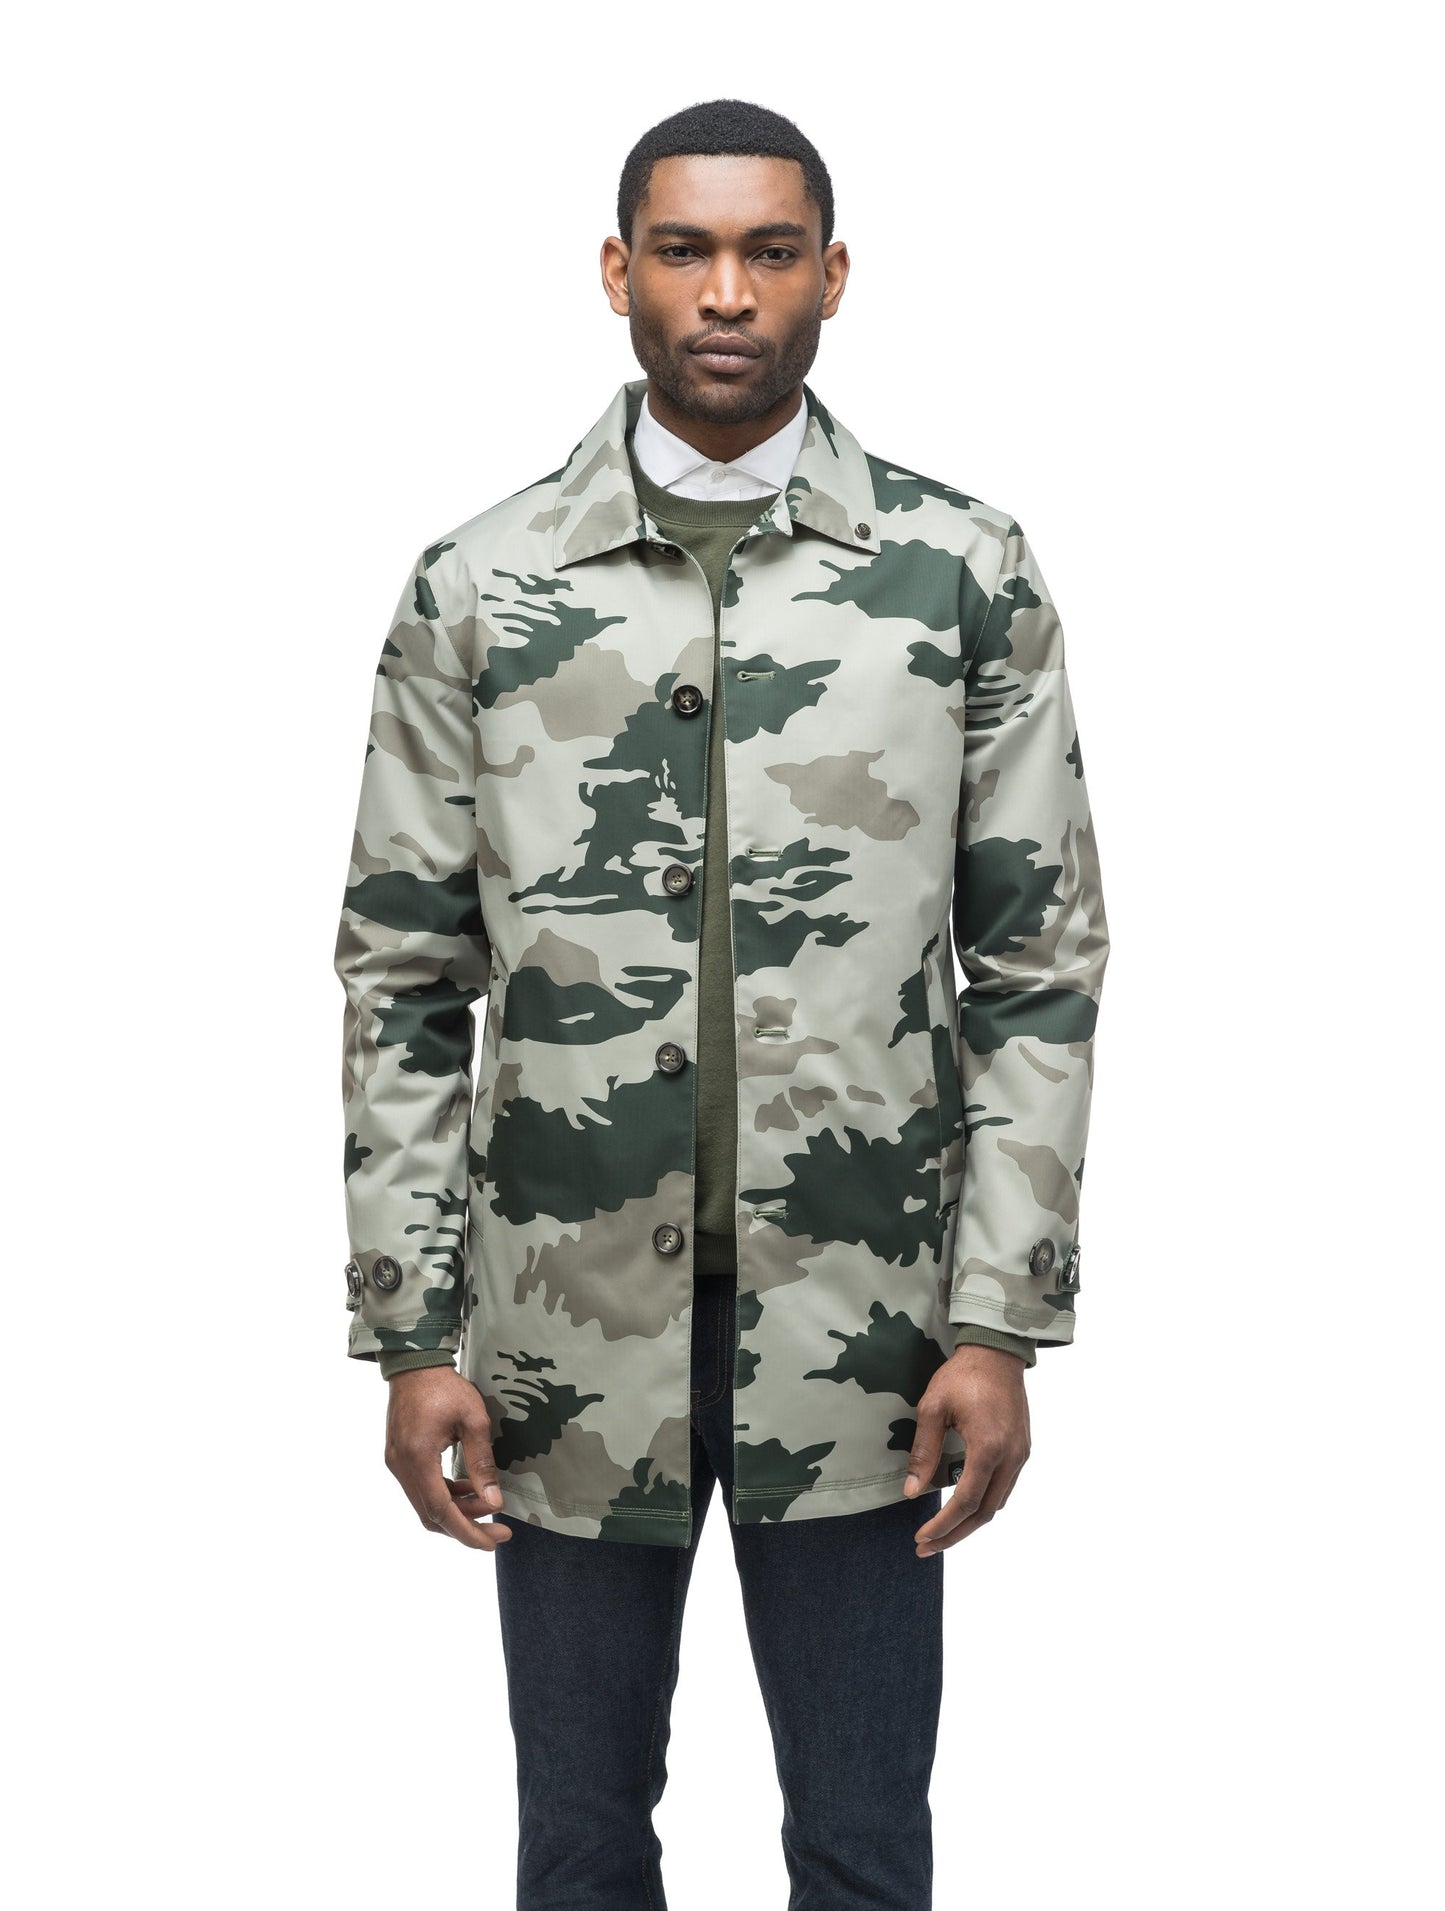 Men's Macintosh style raincoat in Army Green Camo